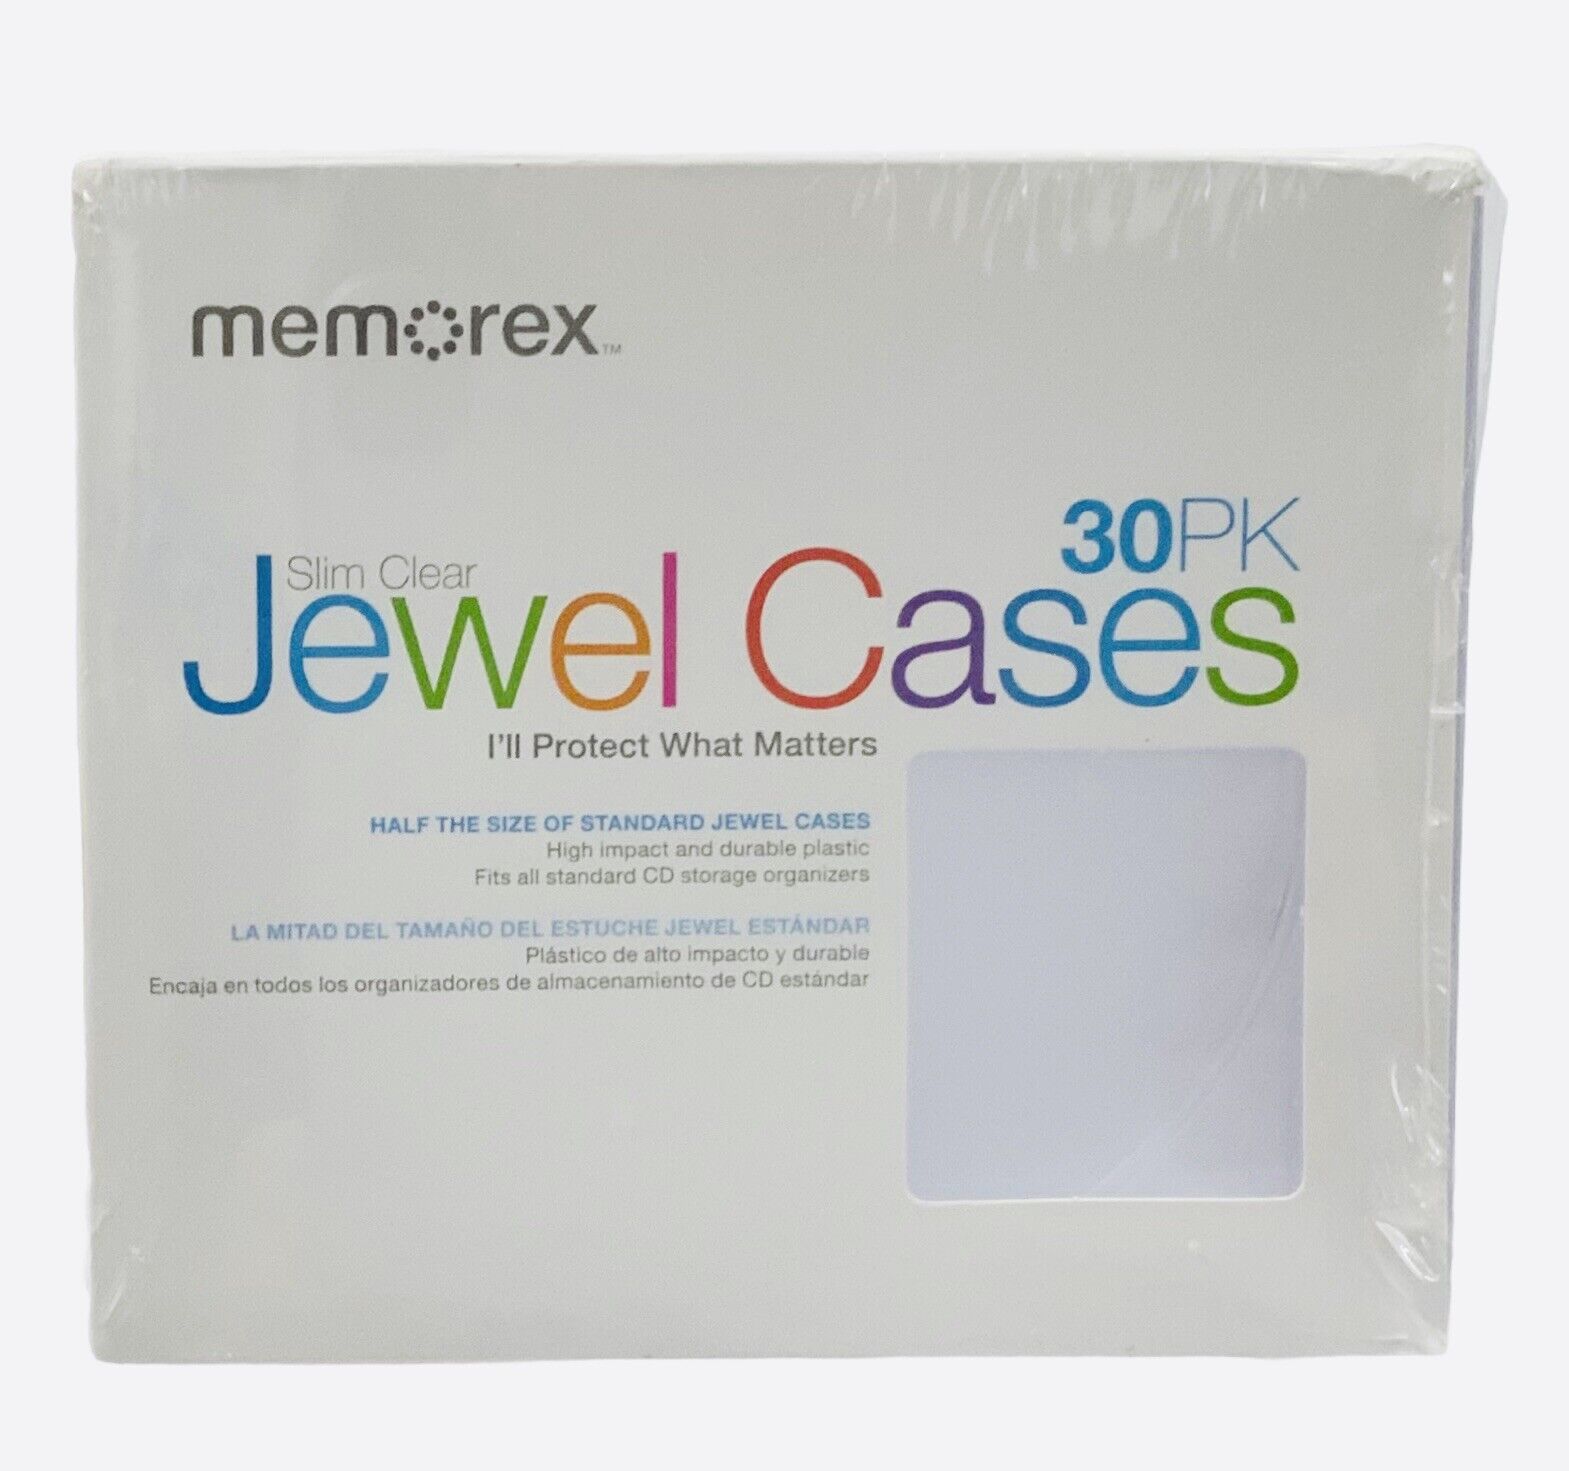 Memorex Jewel Cases - Slim Clear - Pack of 30 Cases CD Holders F